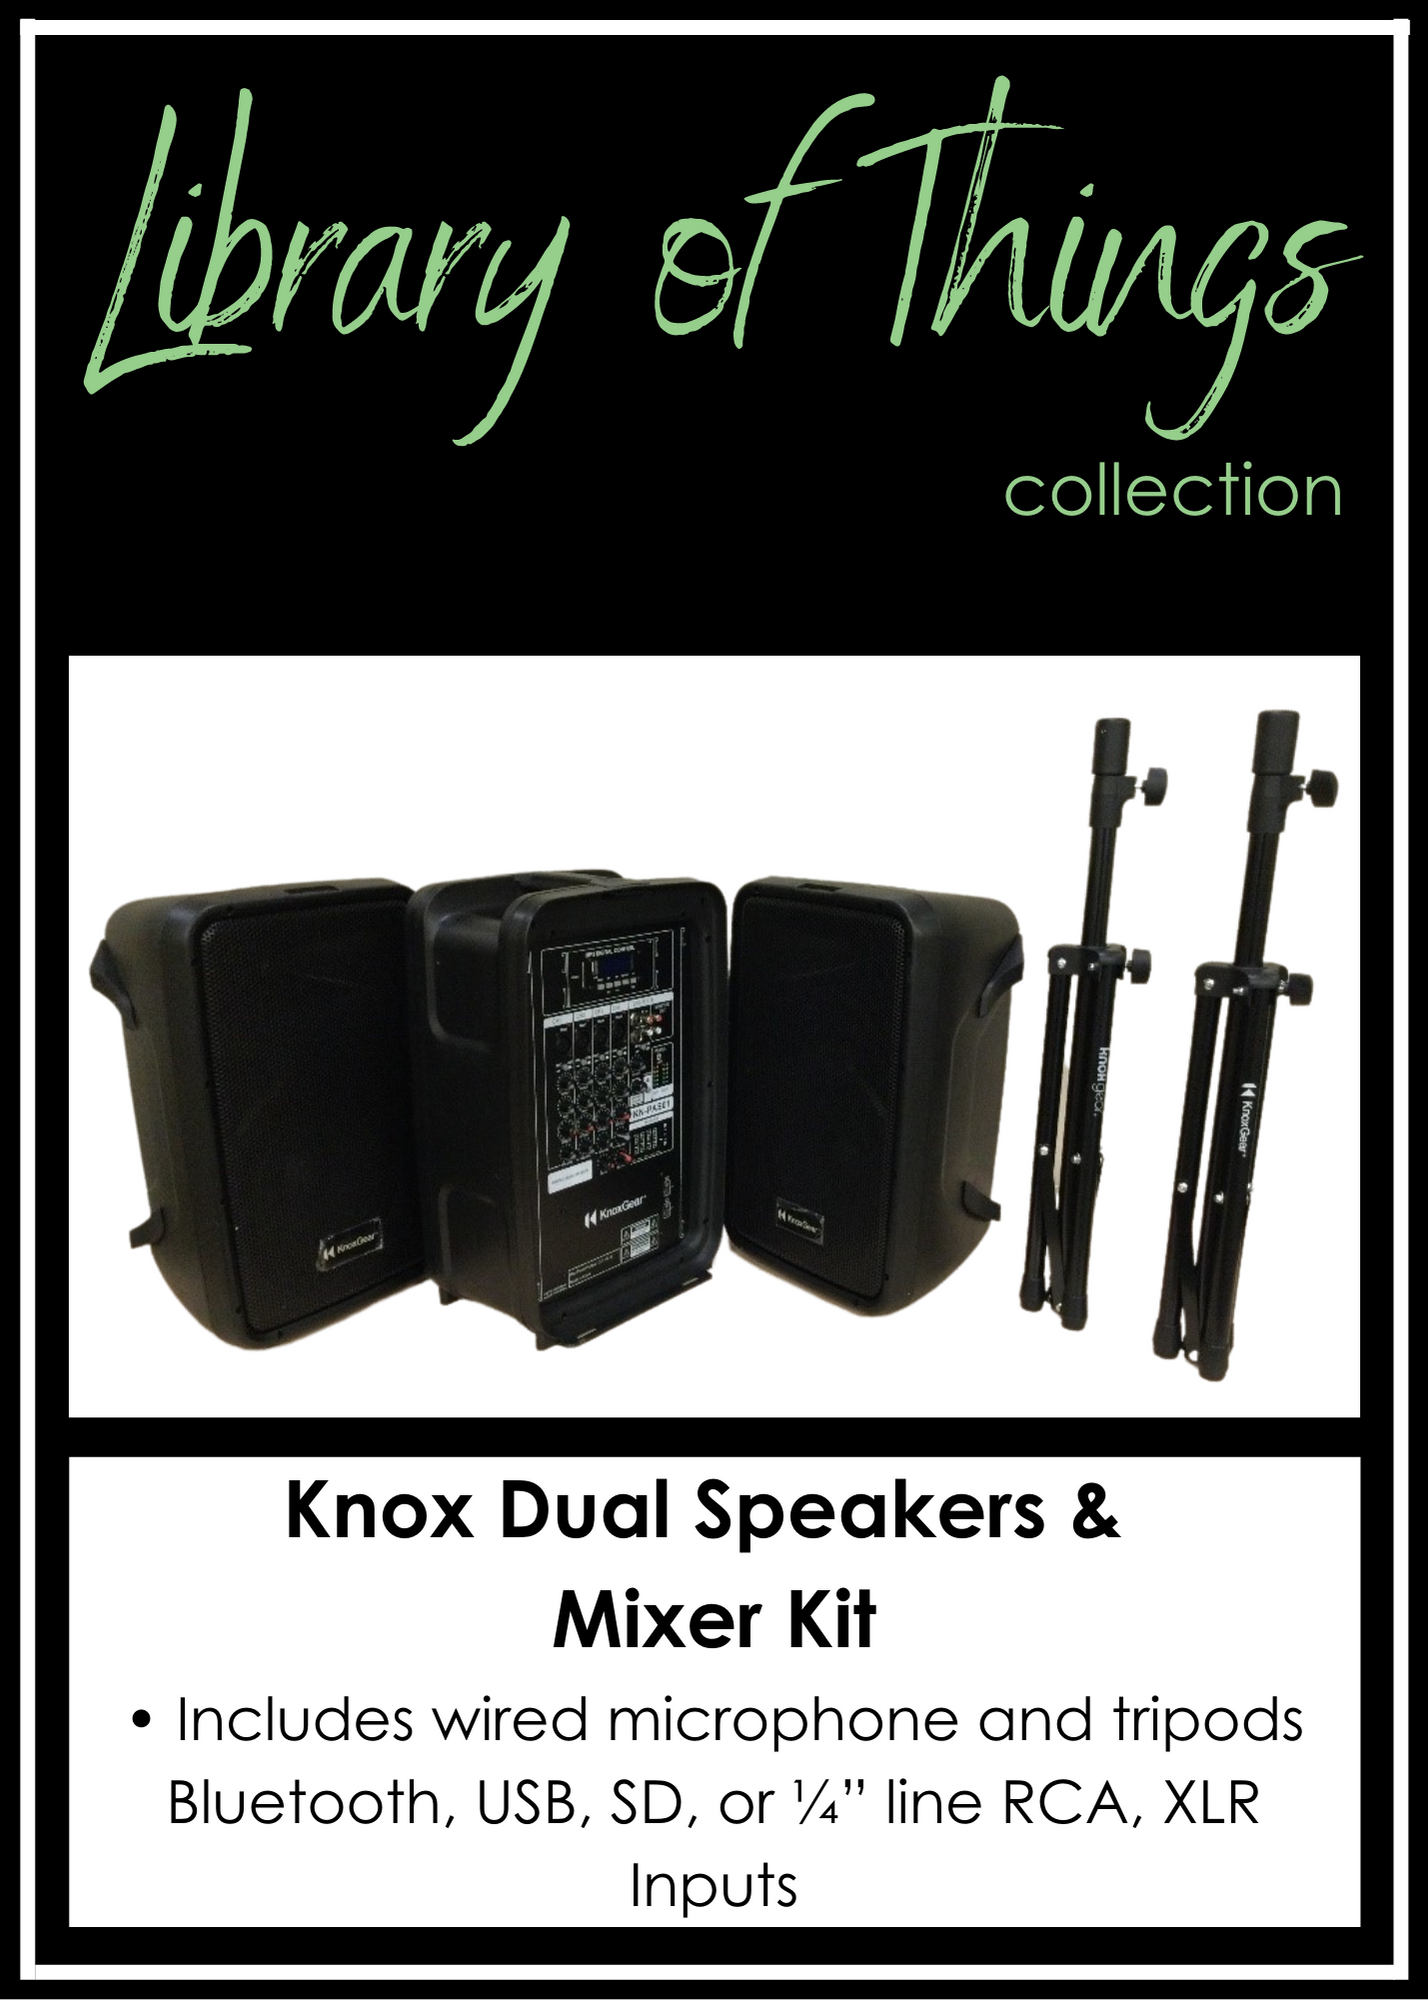 Knox Dual Speakers & Mixer Kit